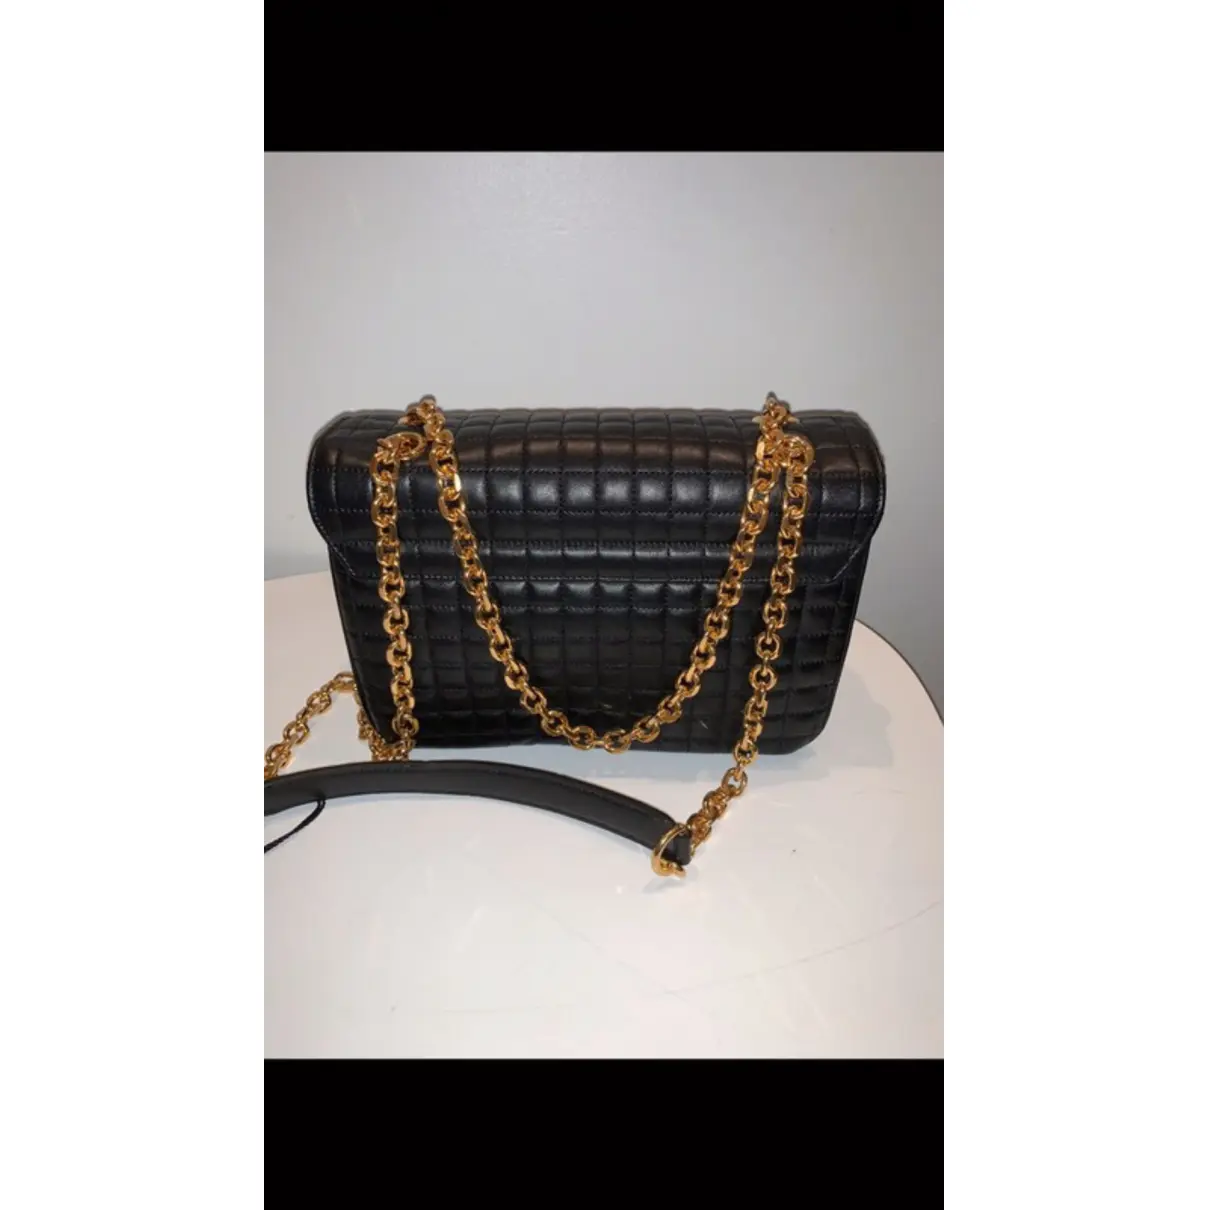 Buy Celine C bag leather crossbody bag online